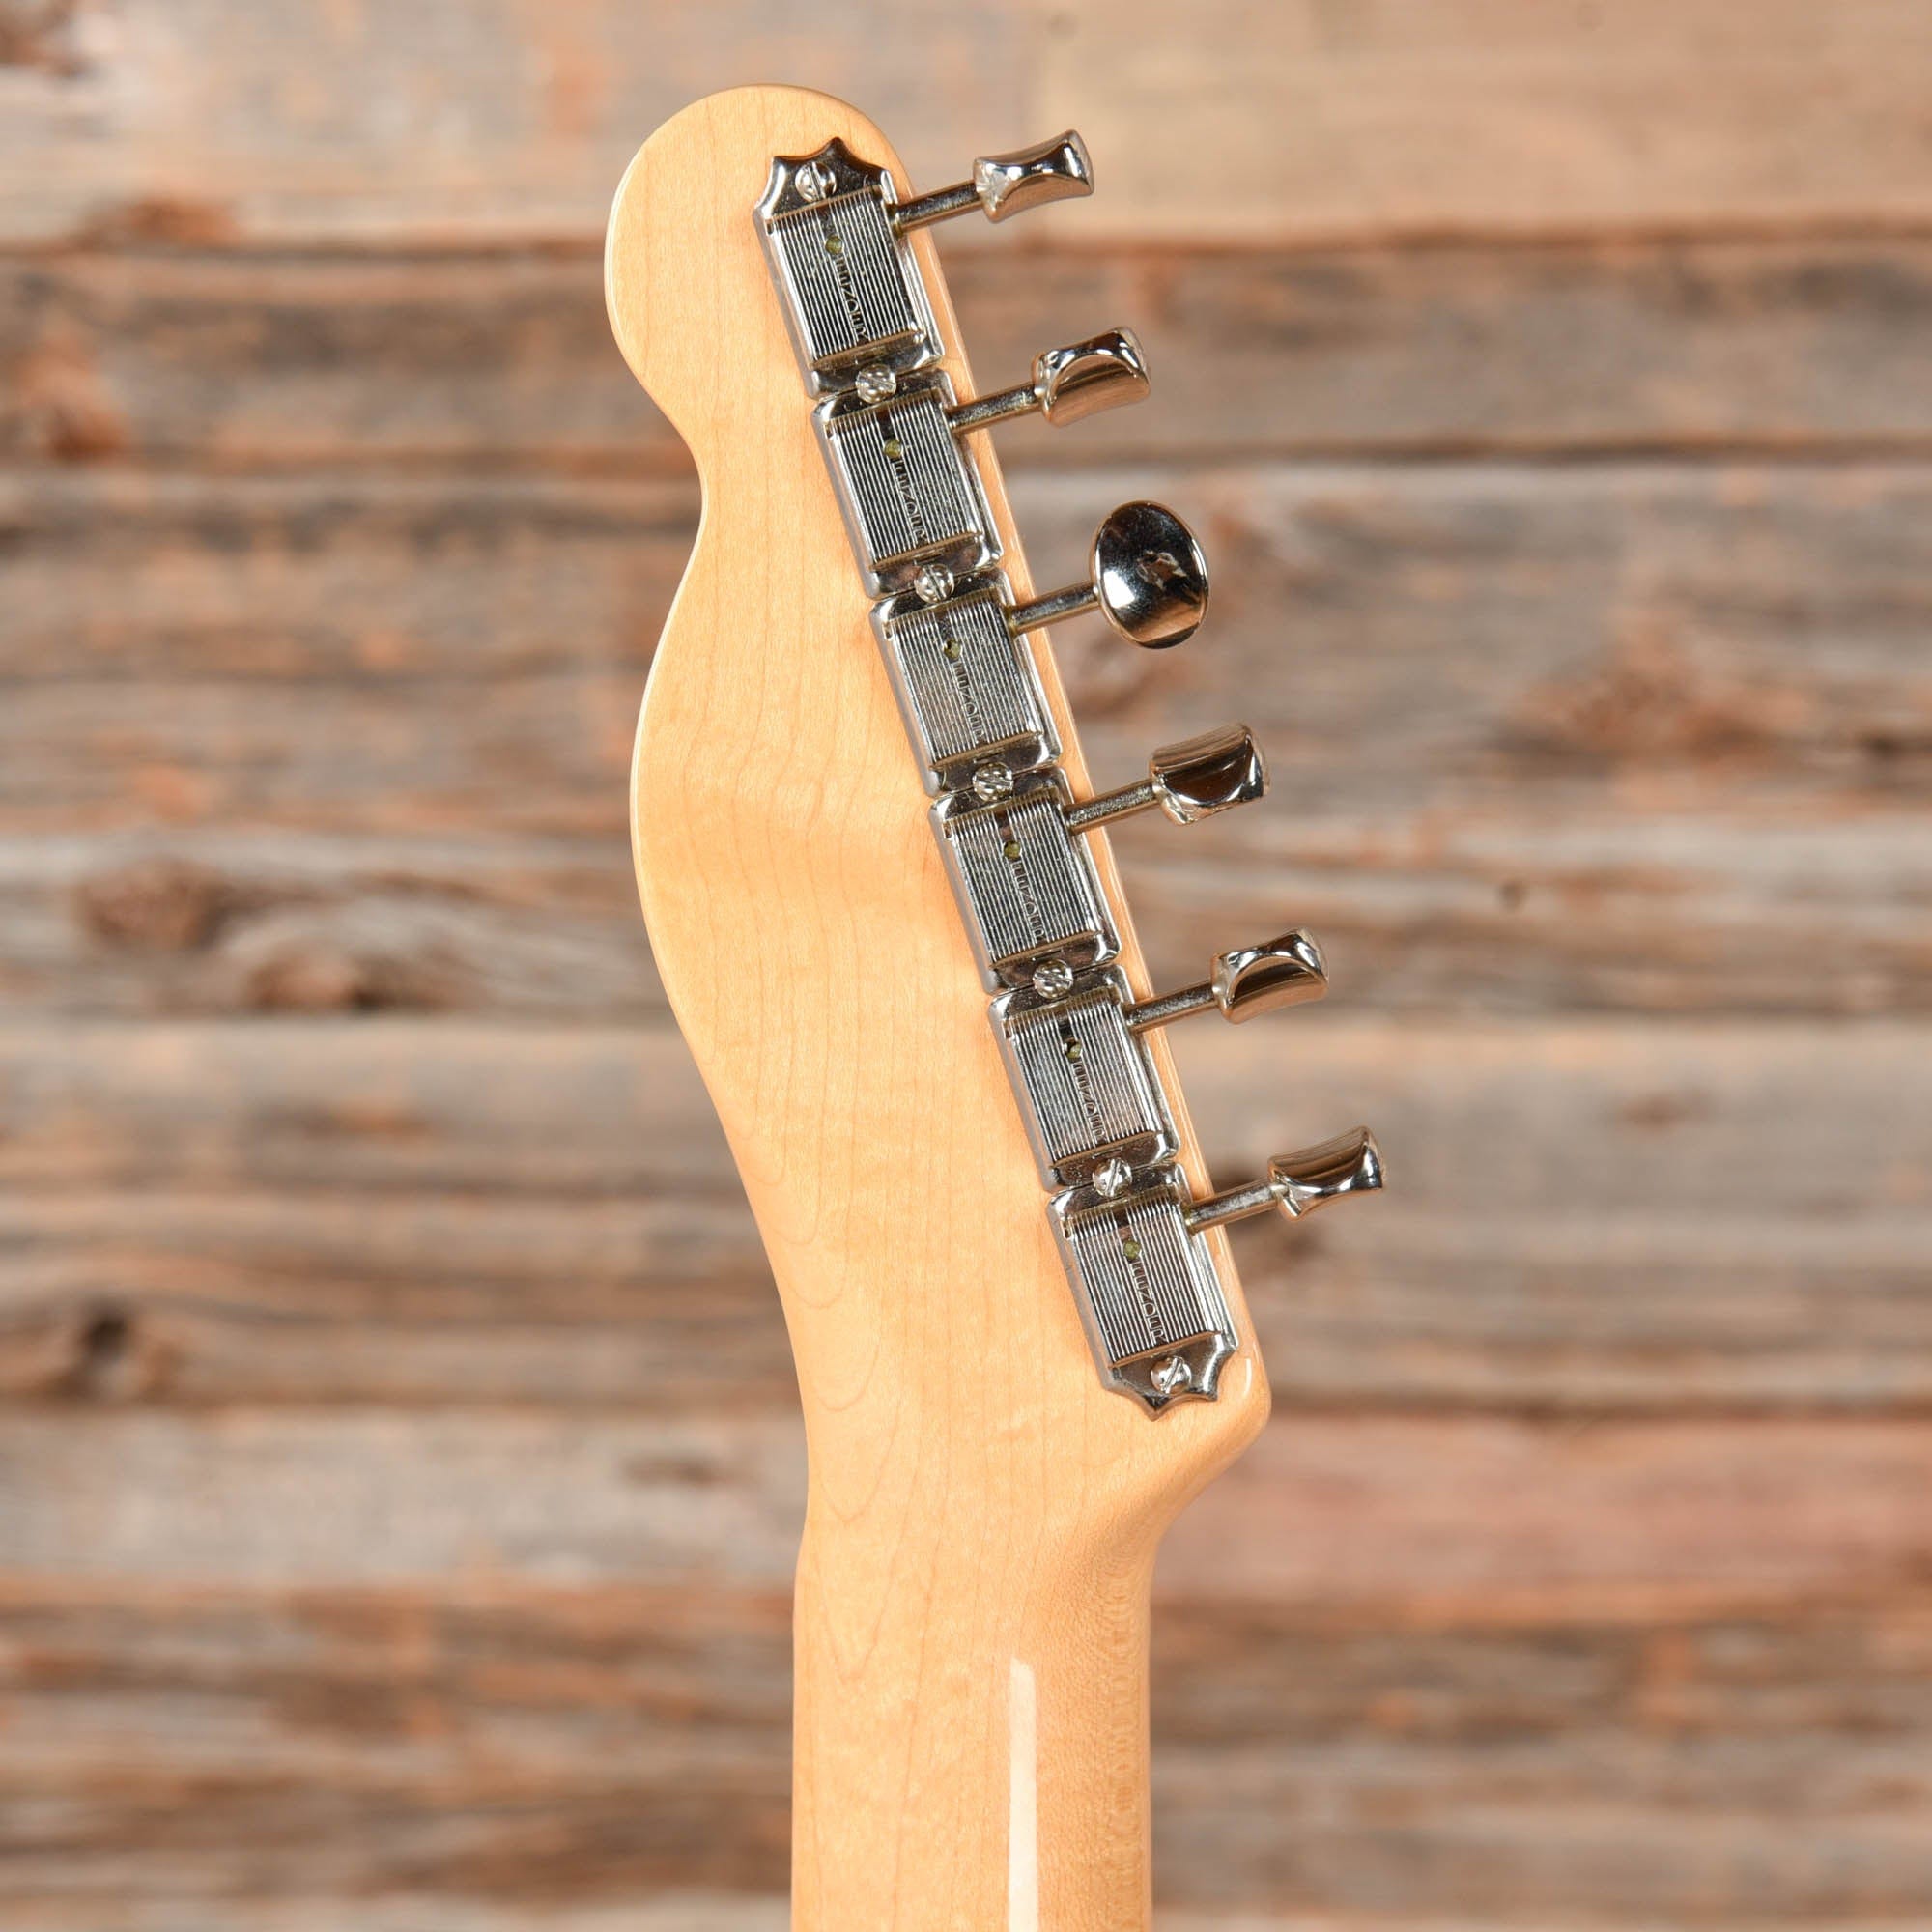 Fender American Original 50's Telecaster Butterscotch Blonde 2020 Electric Guitars / Solid Body